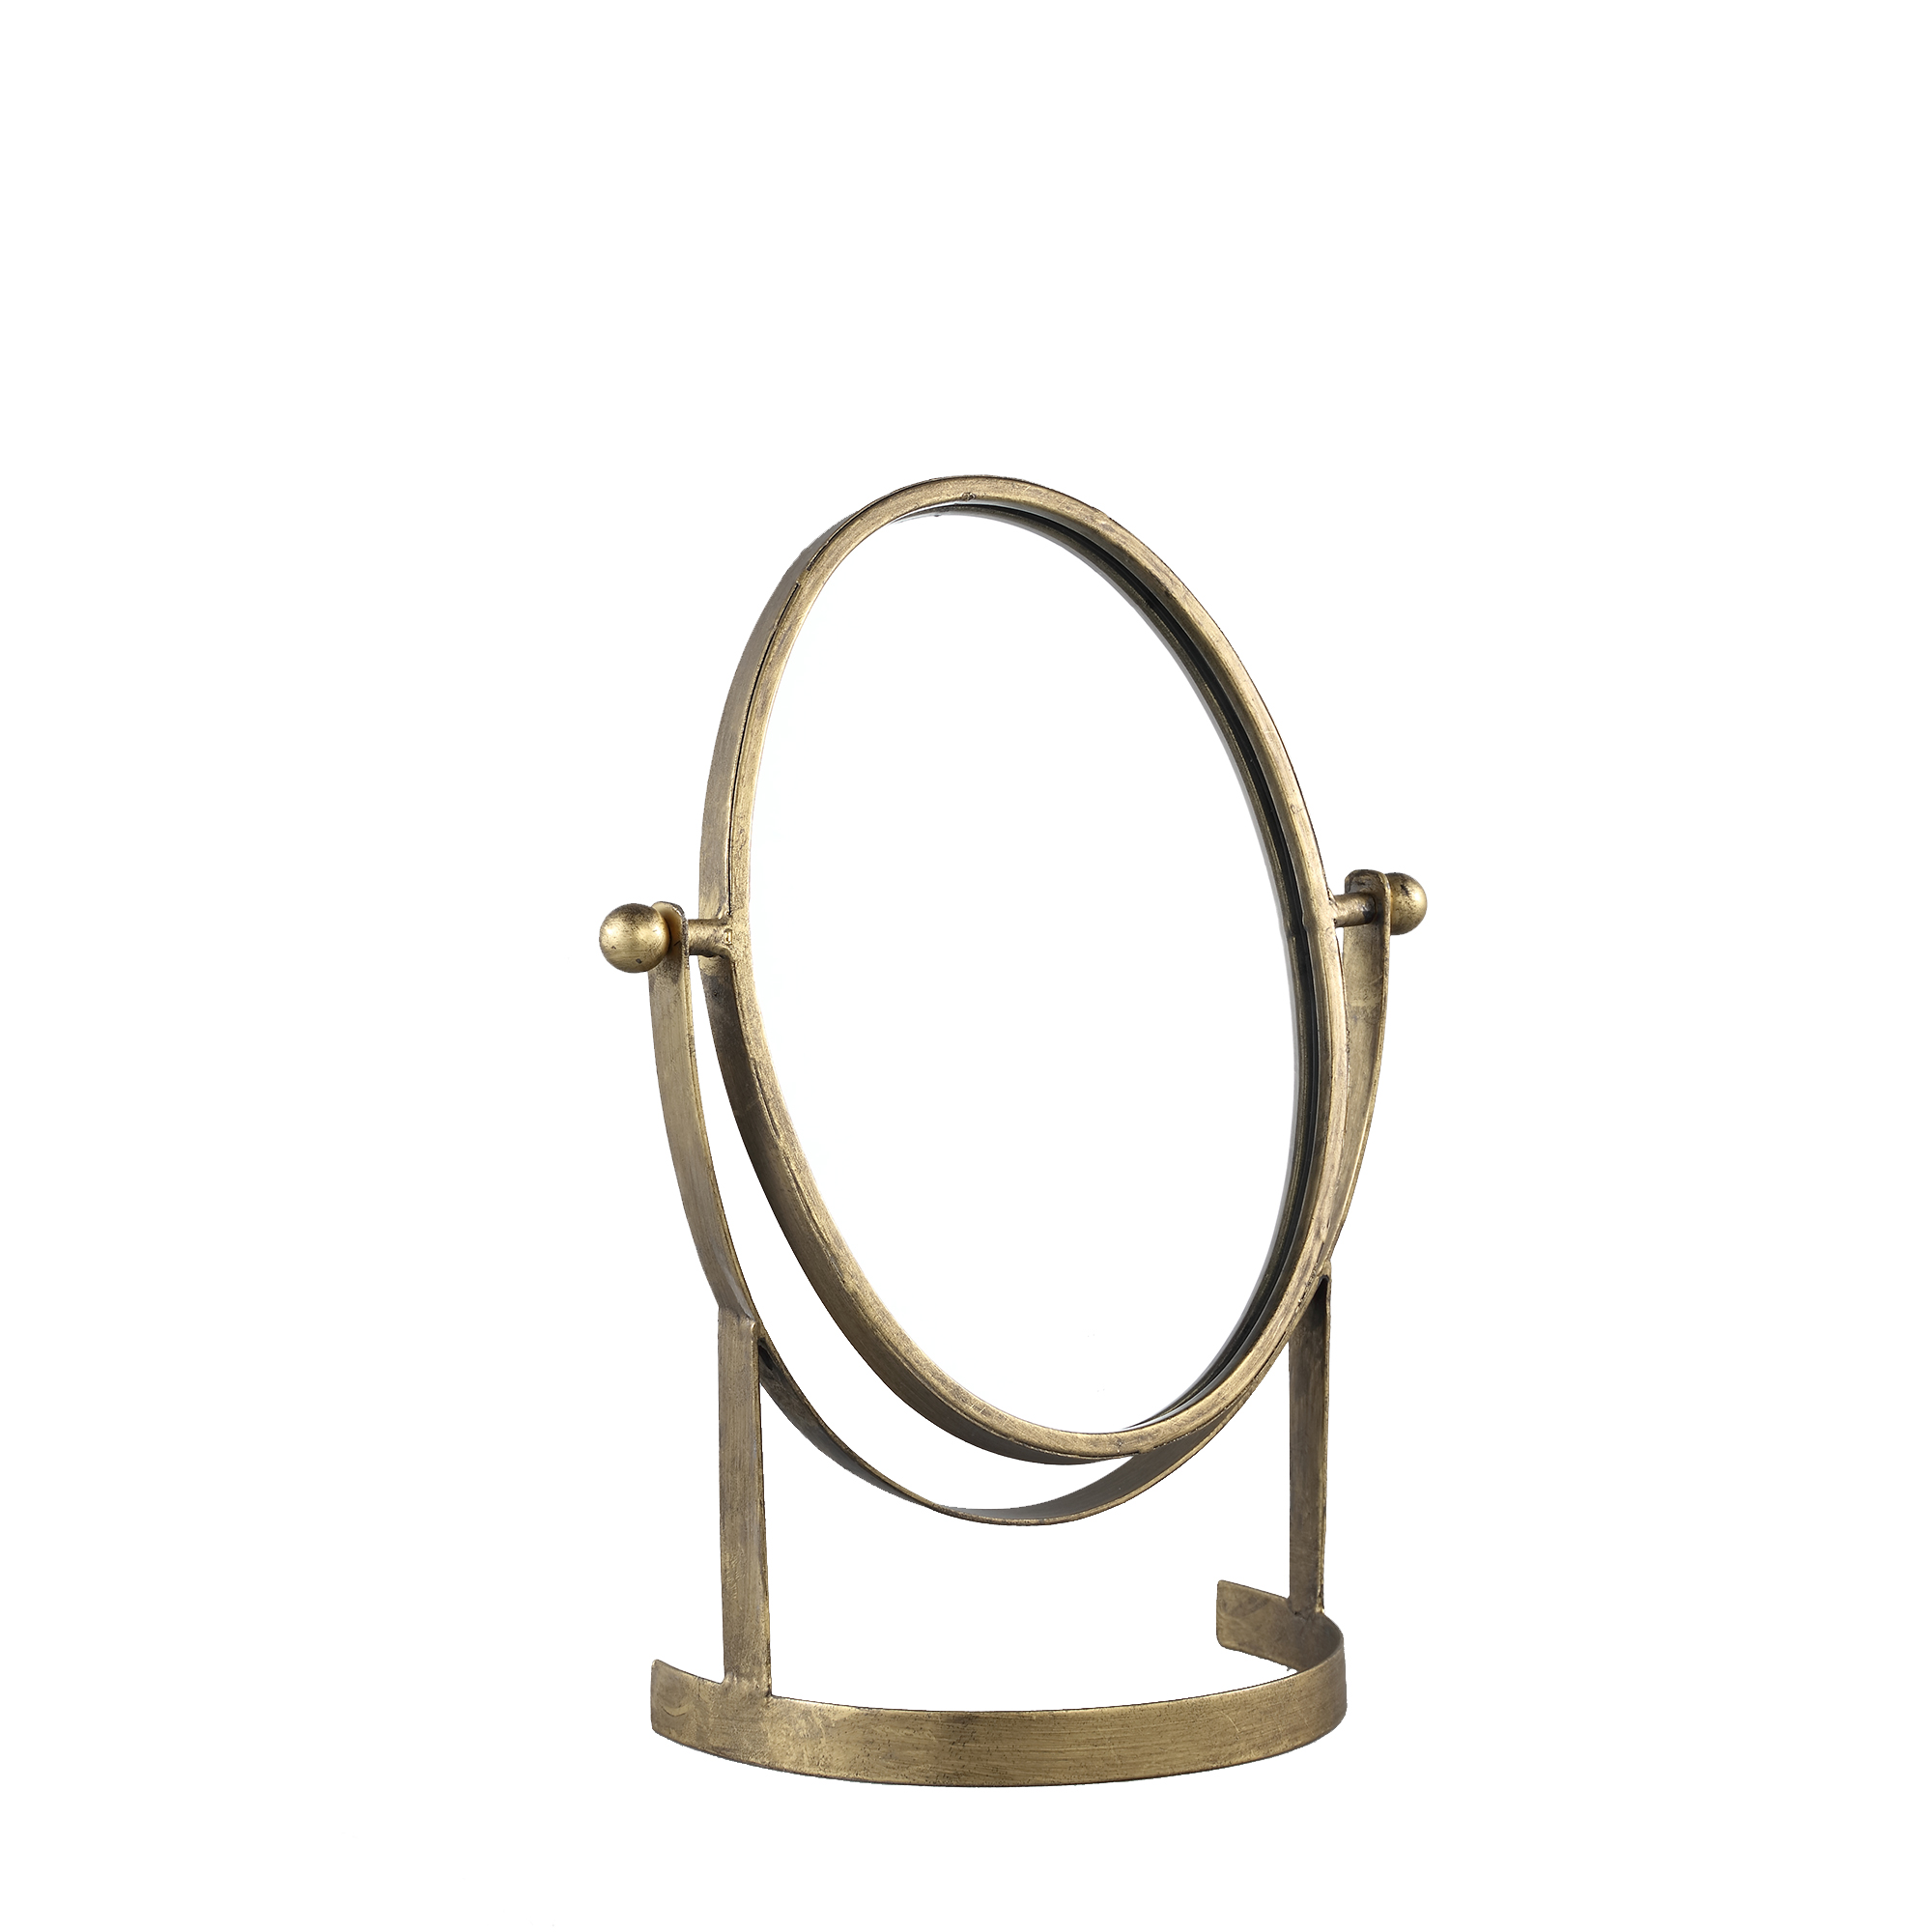 Annika Gold metal table mirror oval shape